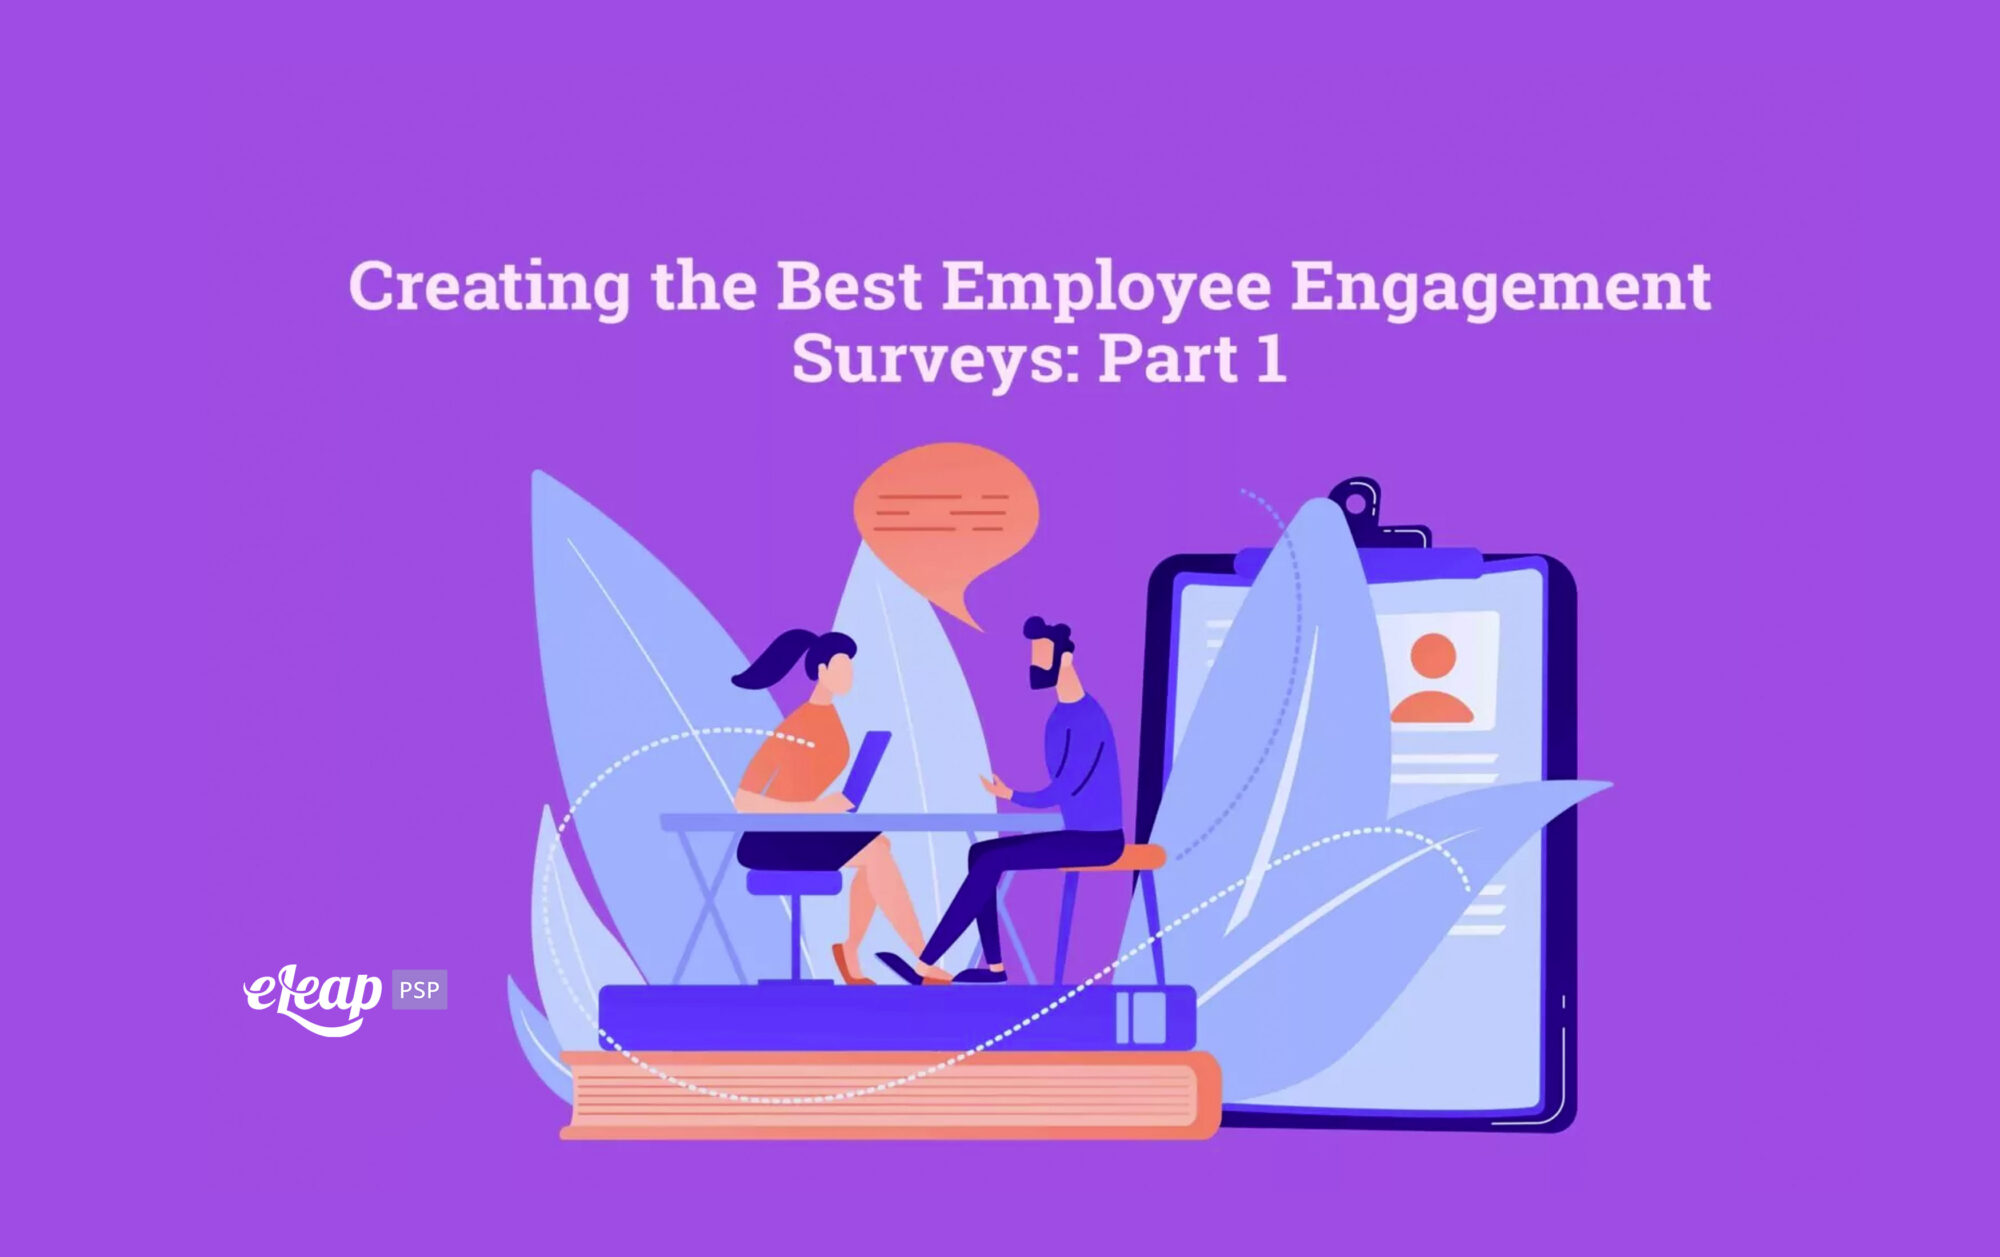 Creating the Best Employee Engagement Surveys: Part 1
